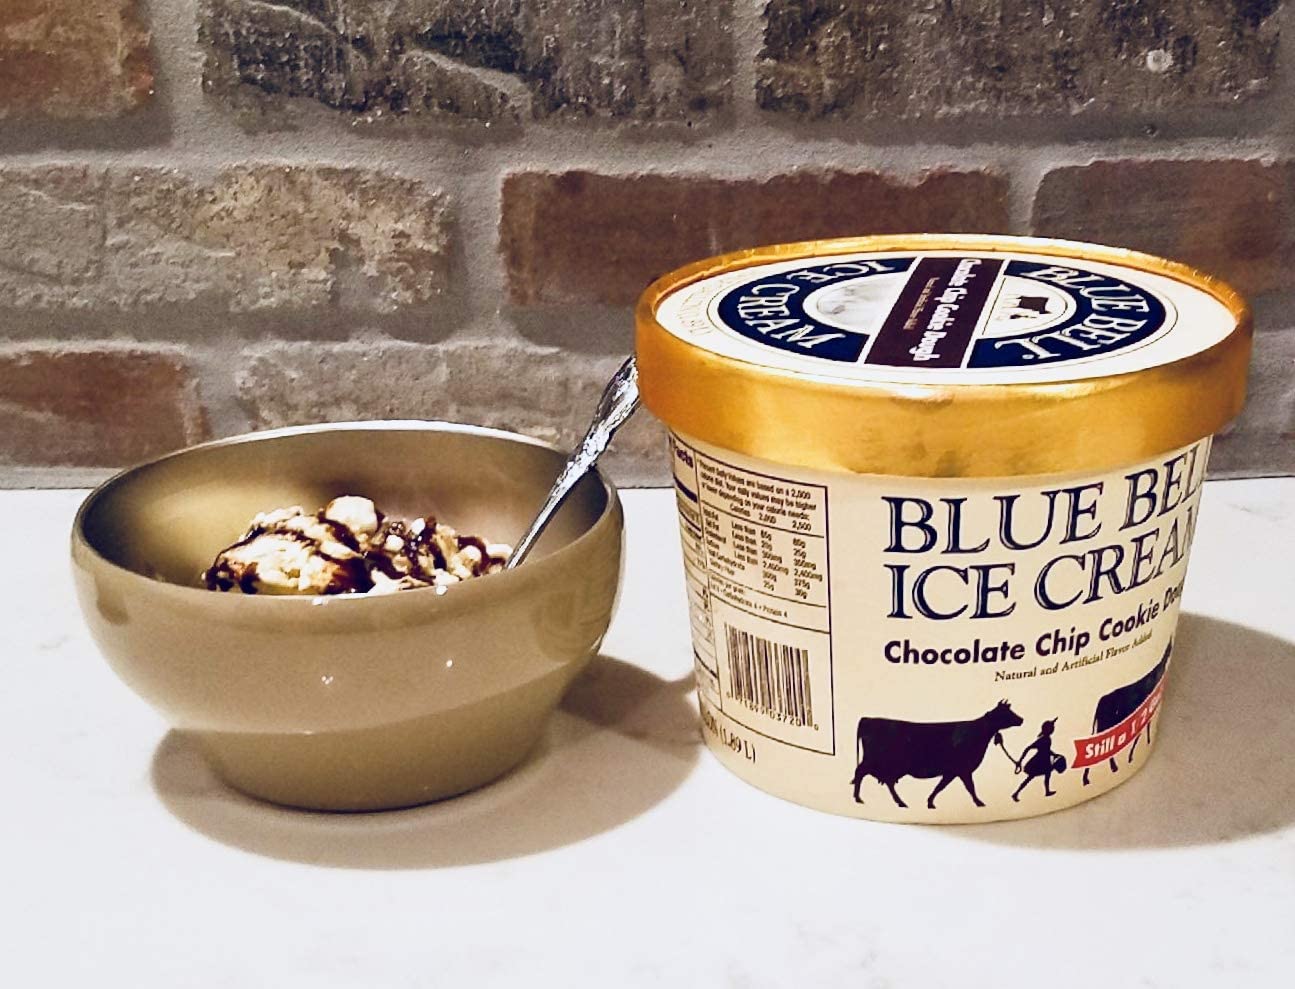 blue bell ice cream carton next to gold ice cream bowl